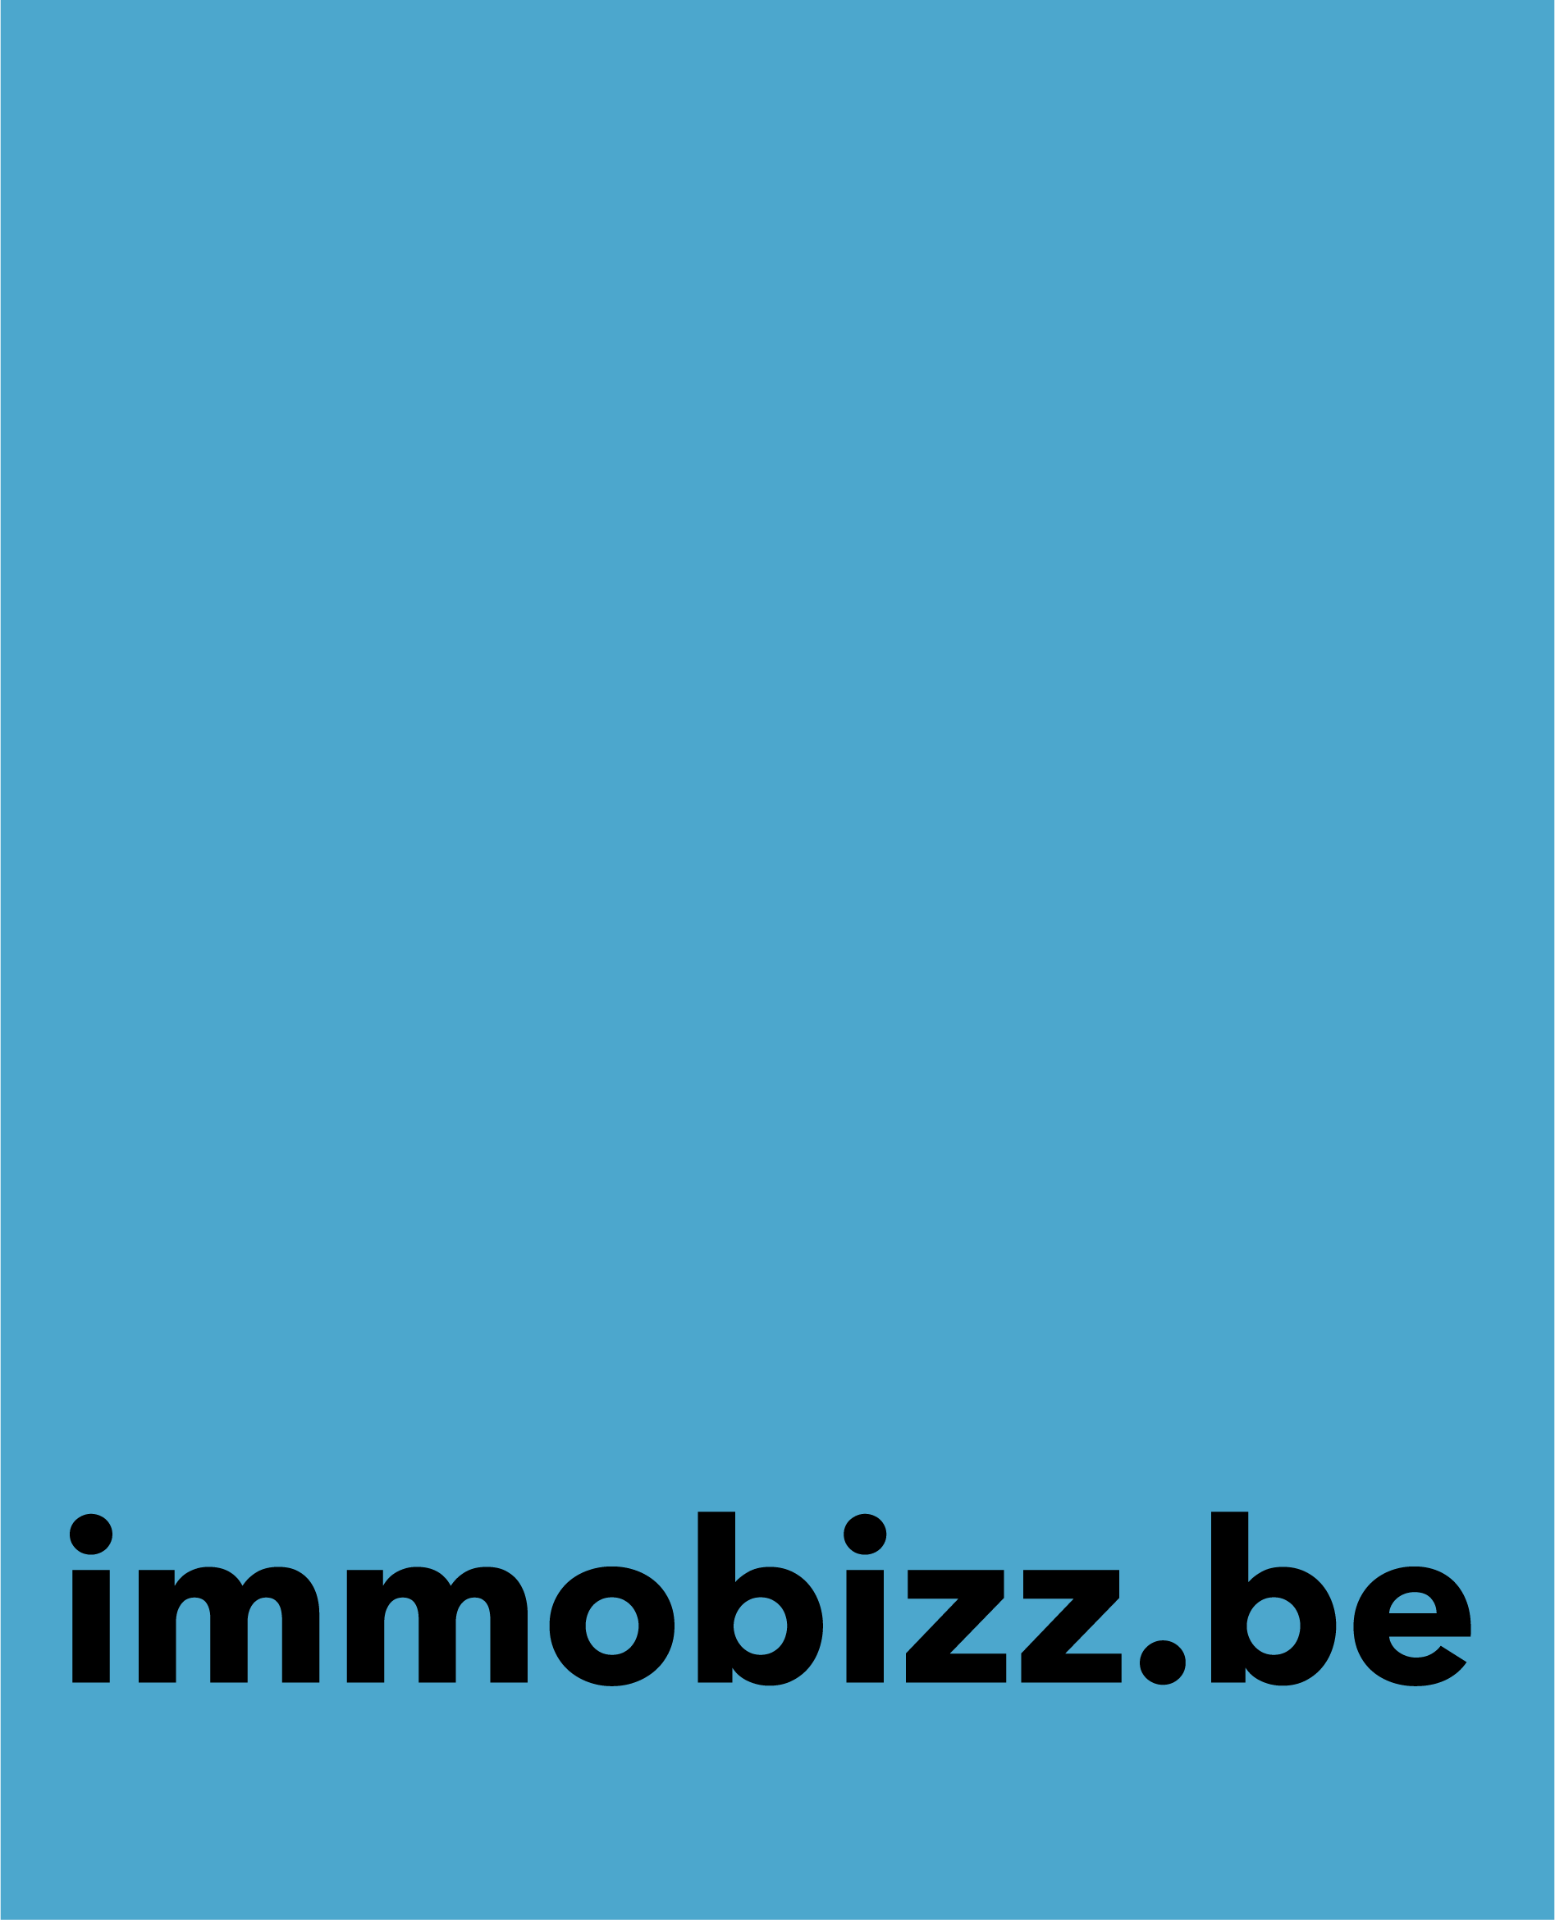 Immobizz Bvba logo